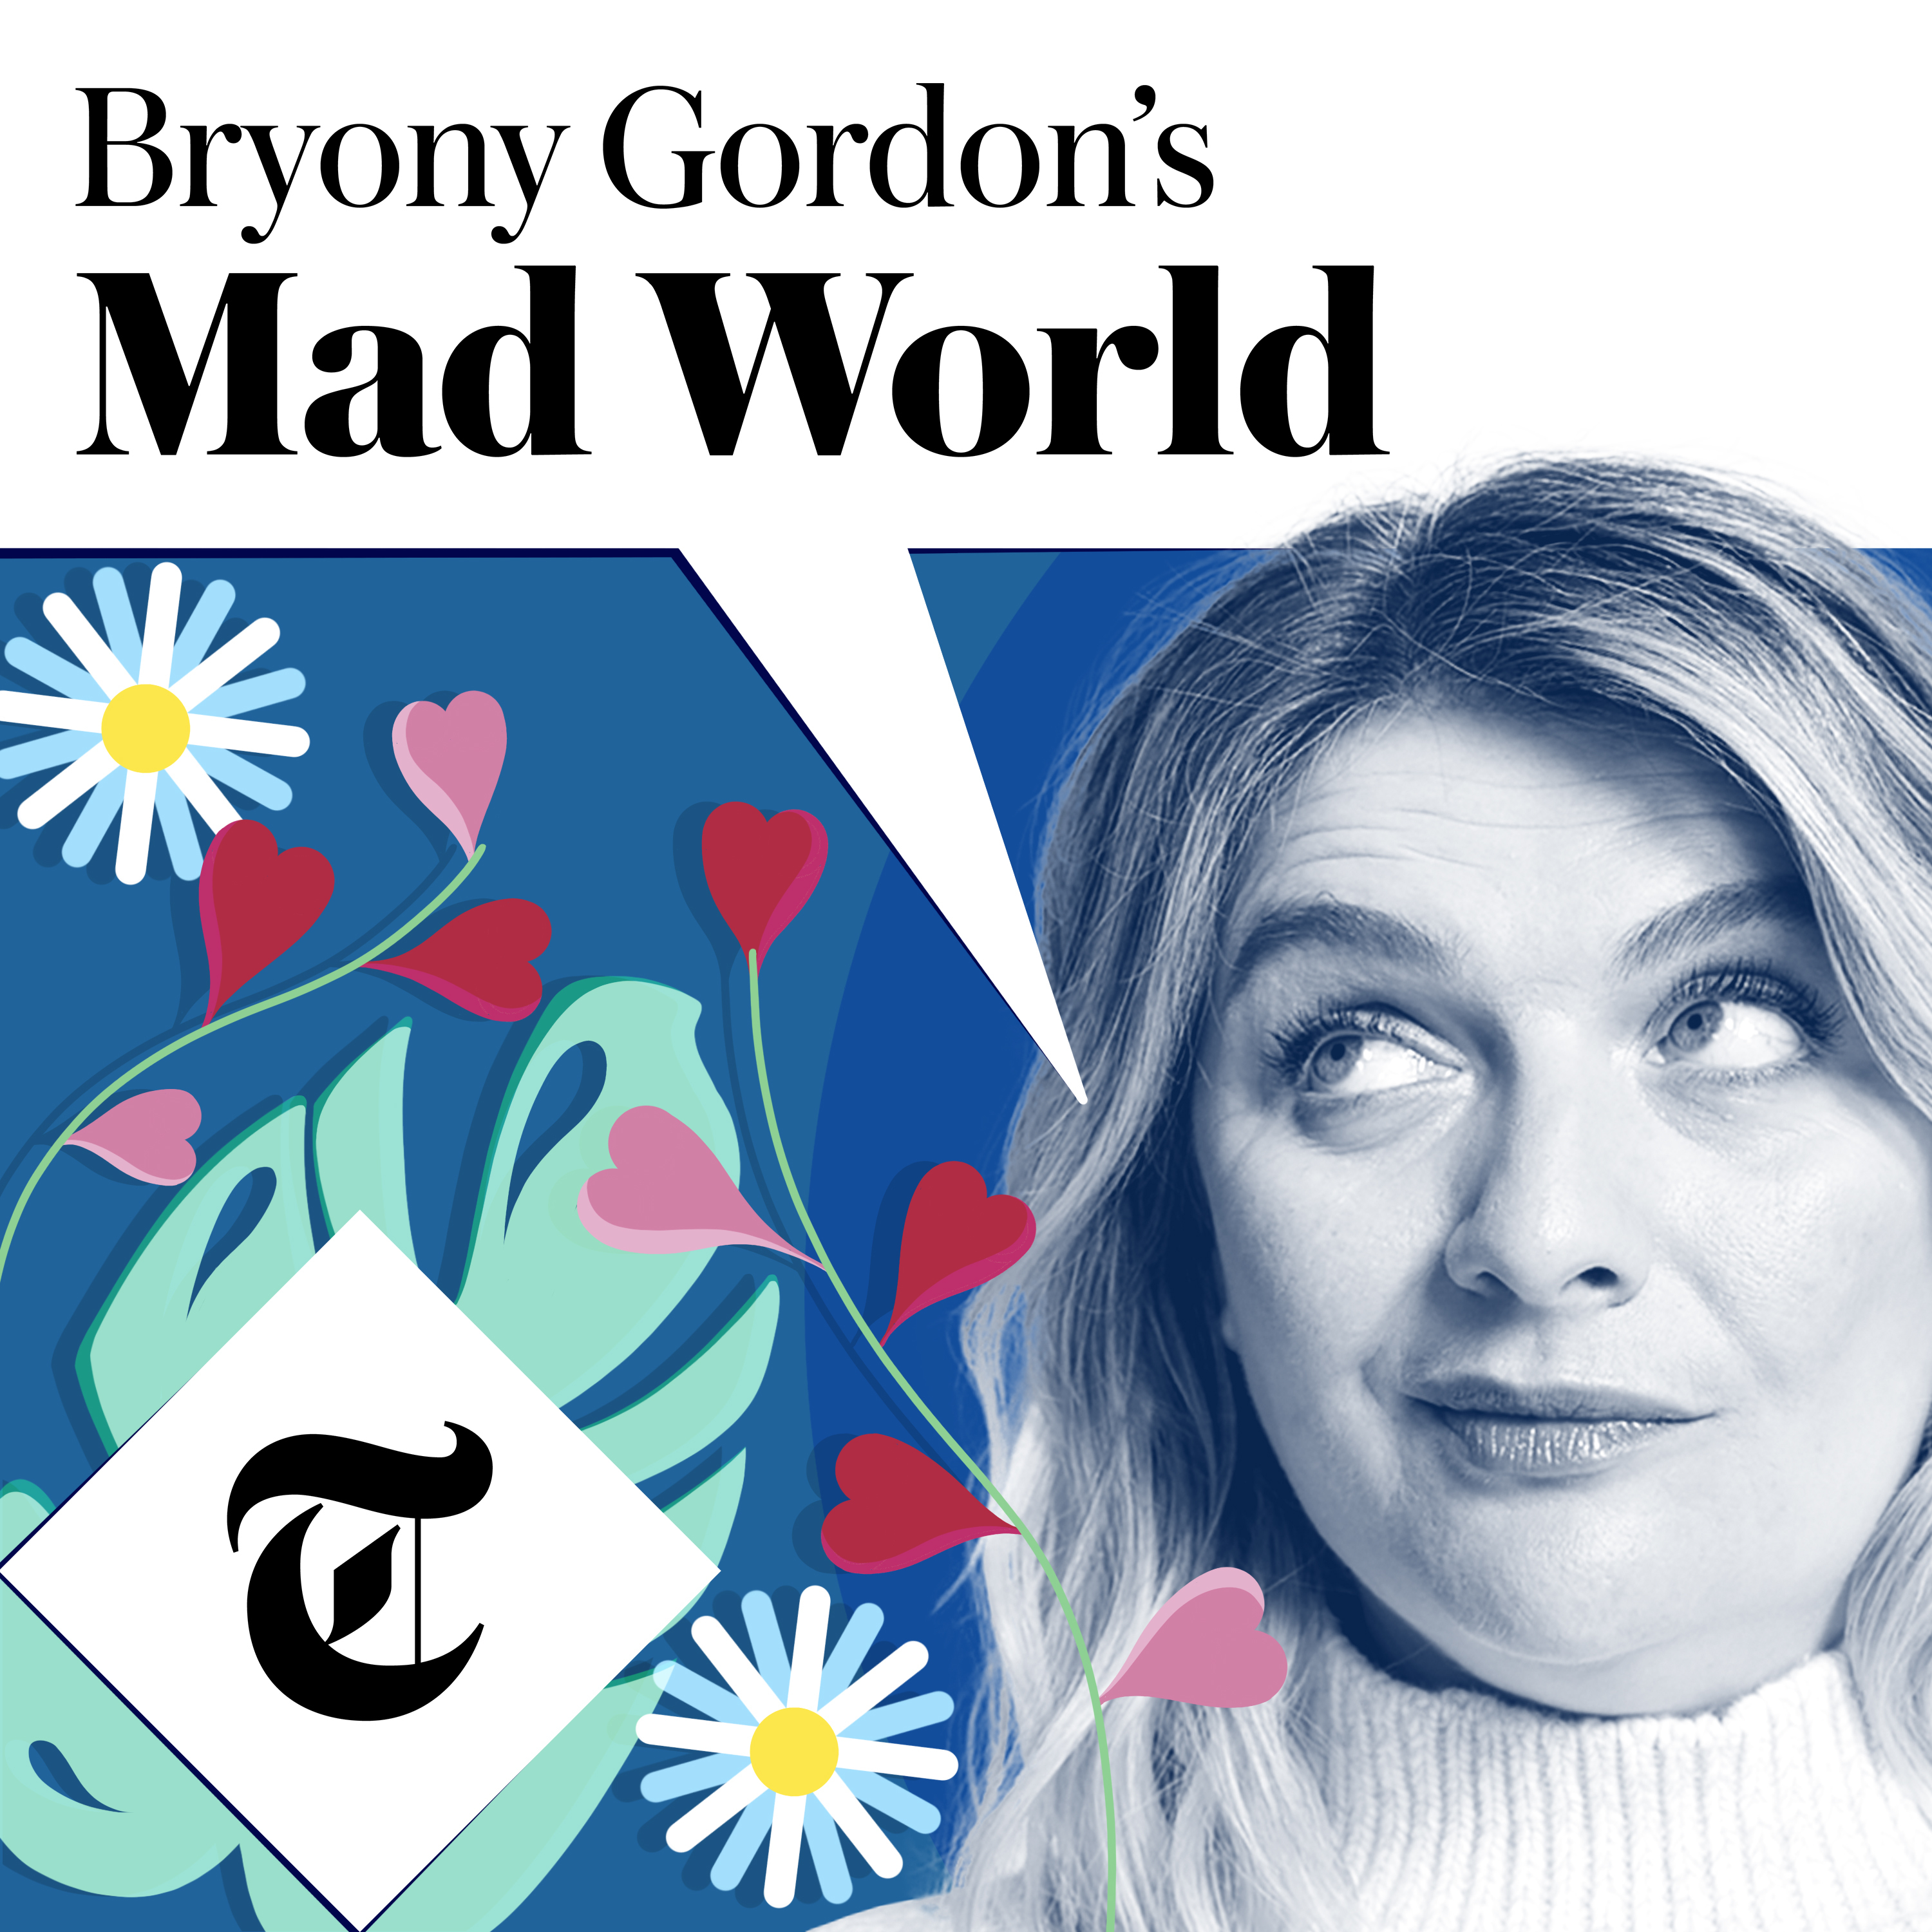 Bryony Gordon's Mad World podcast